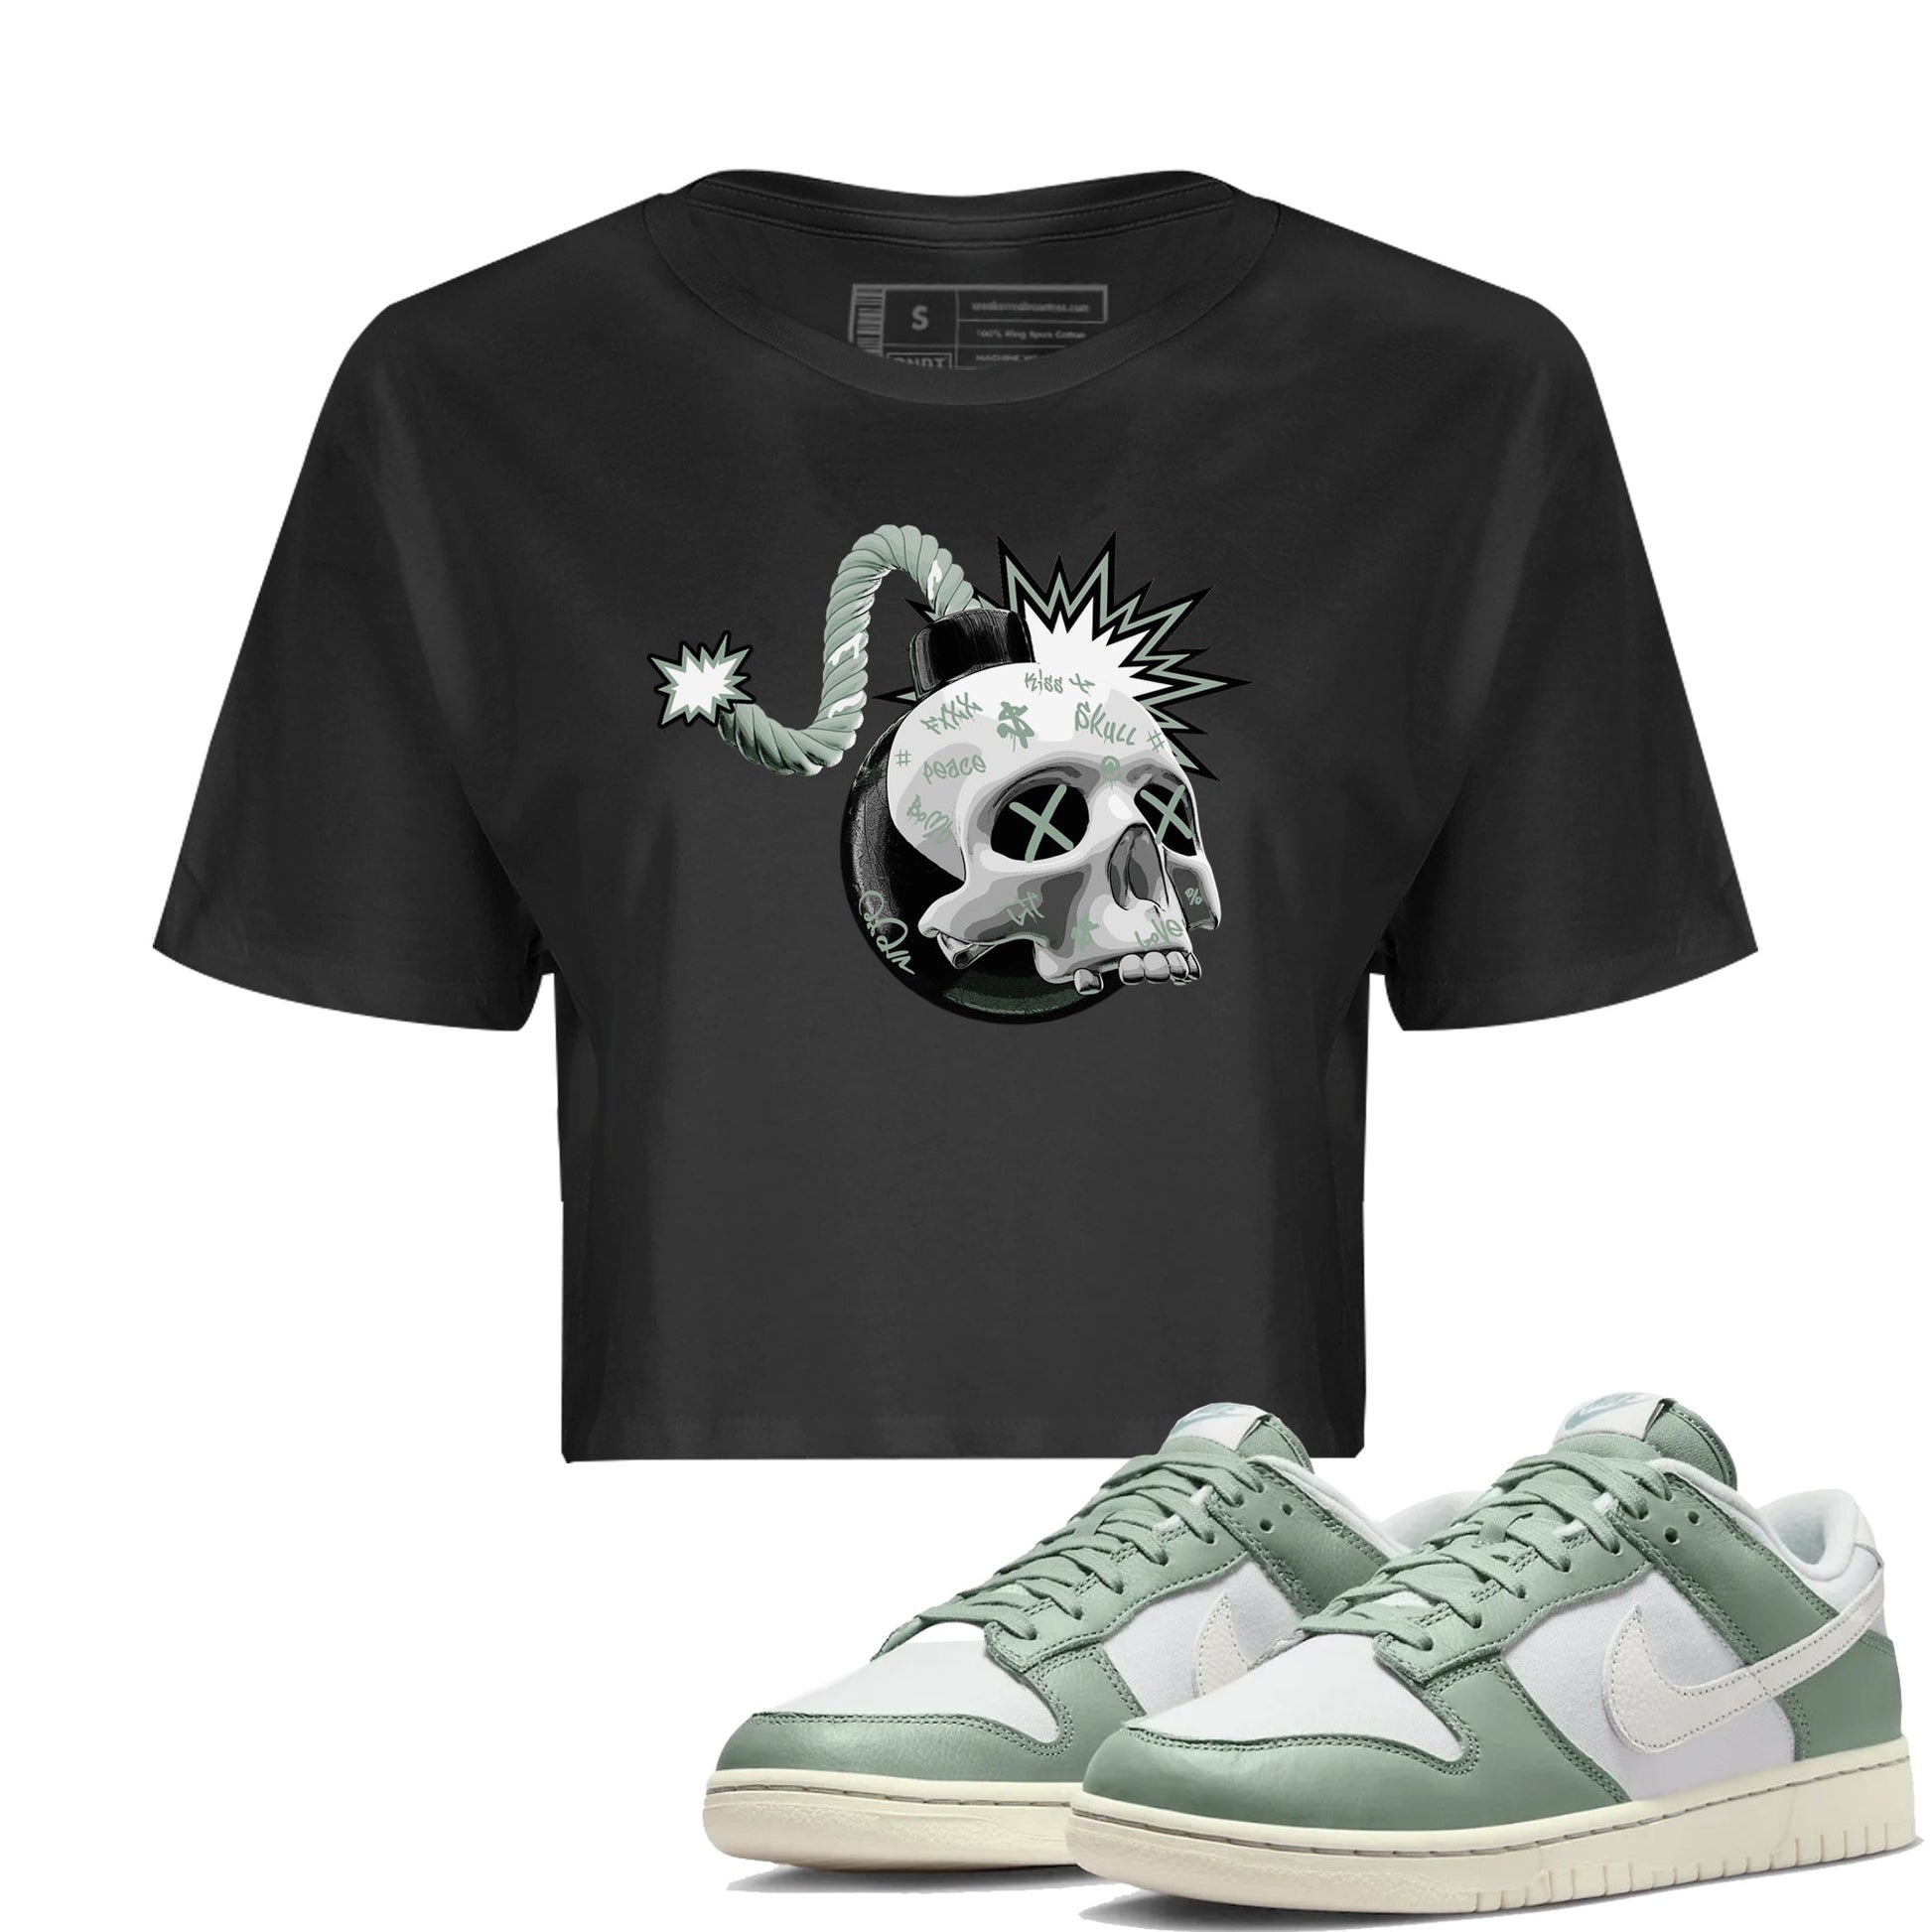 Dunk Mica Green Sneaker Match Tees Skull Bomb Sneaker Tees Dunk Low Mica Green Sneaker Release Tees Women's Shirts Black 1